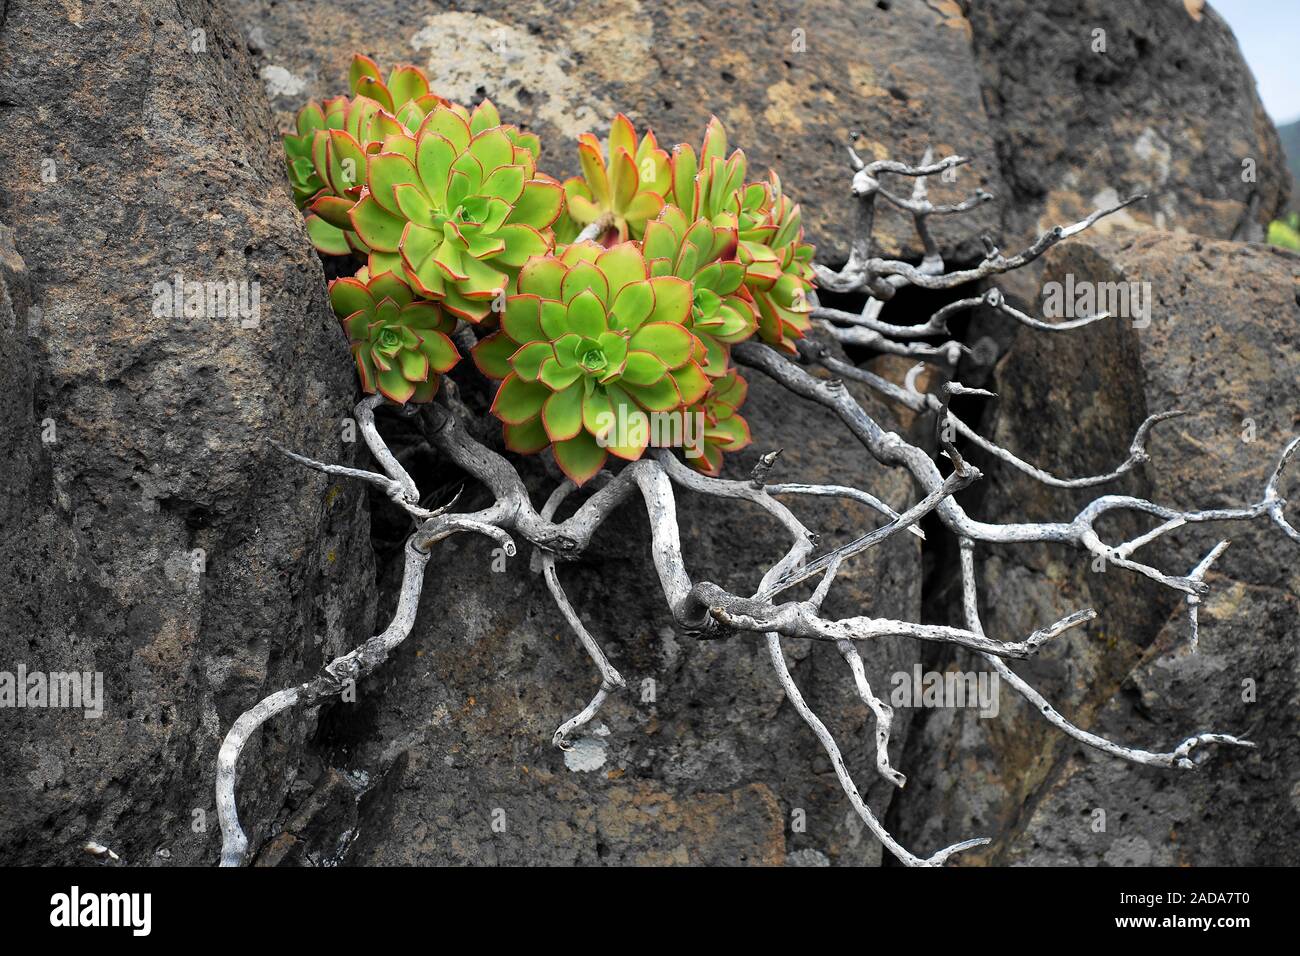 Characteristic vegetation on the edge of a hiking trail on La Gomera, Spain Stock Photo